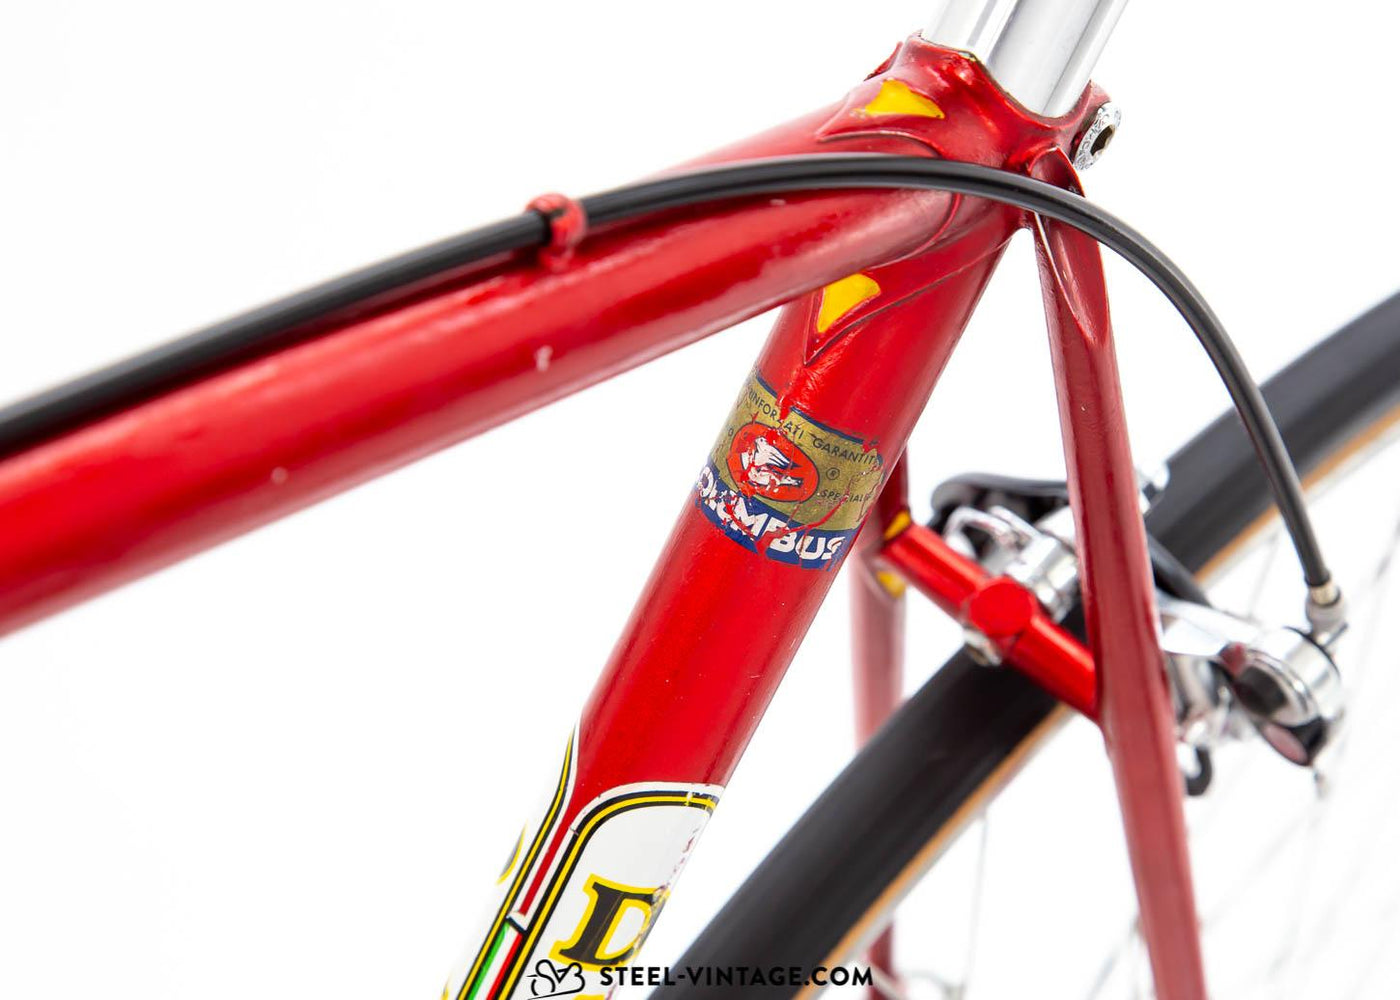 Daccordi Mistral Classic Road Bicycle 1980s - Steel Vintage Bikes